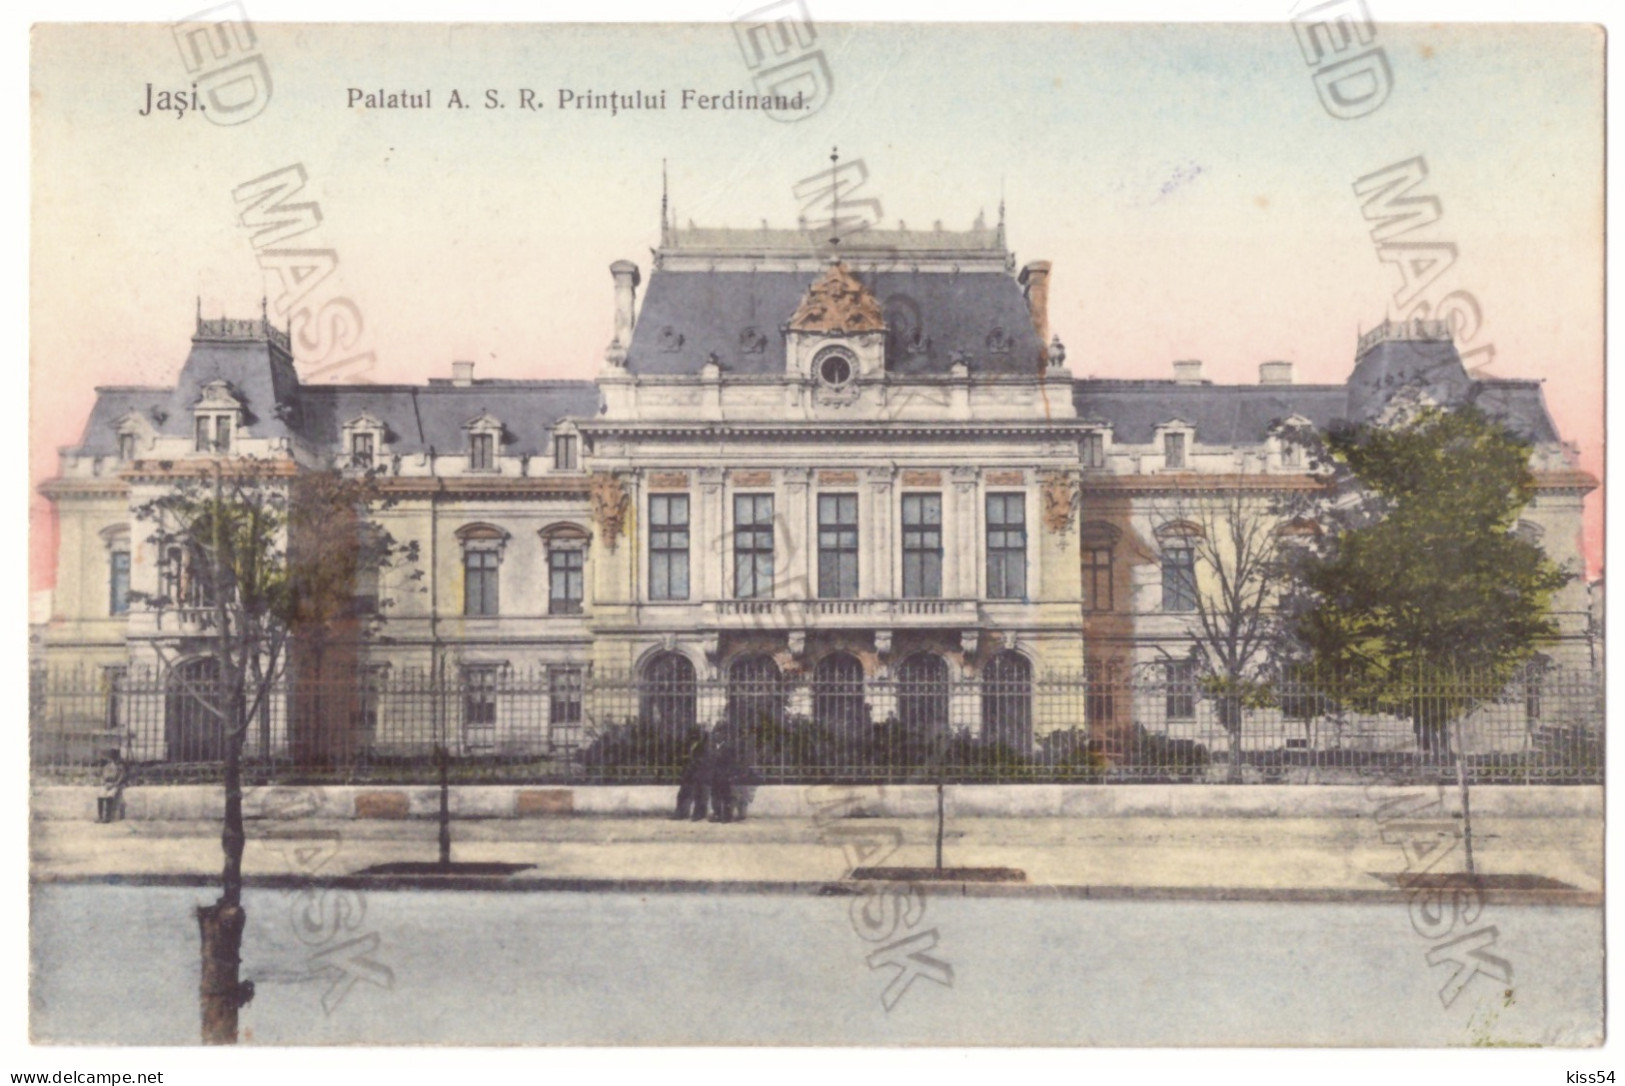 RO 36 - 21529 IASI, Palatul Ferdinand, Romania - Old Postcard - Used - 1908 - Roumanie